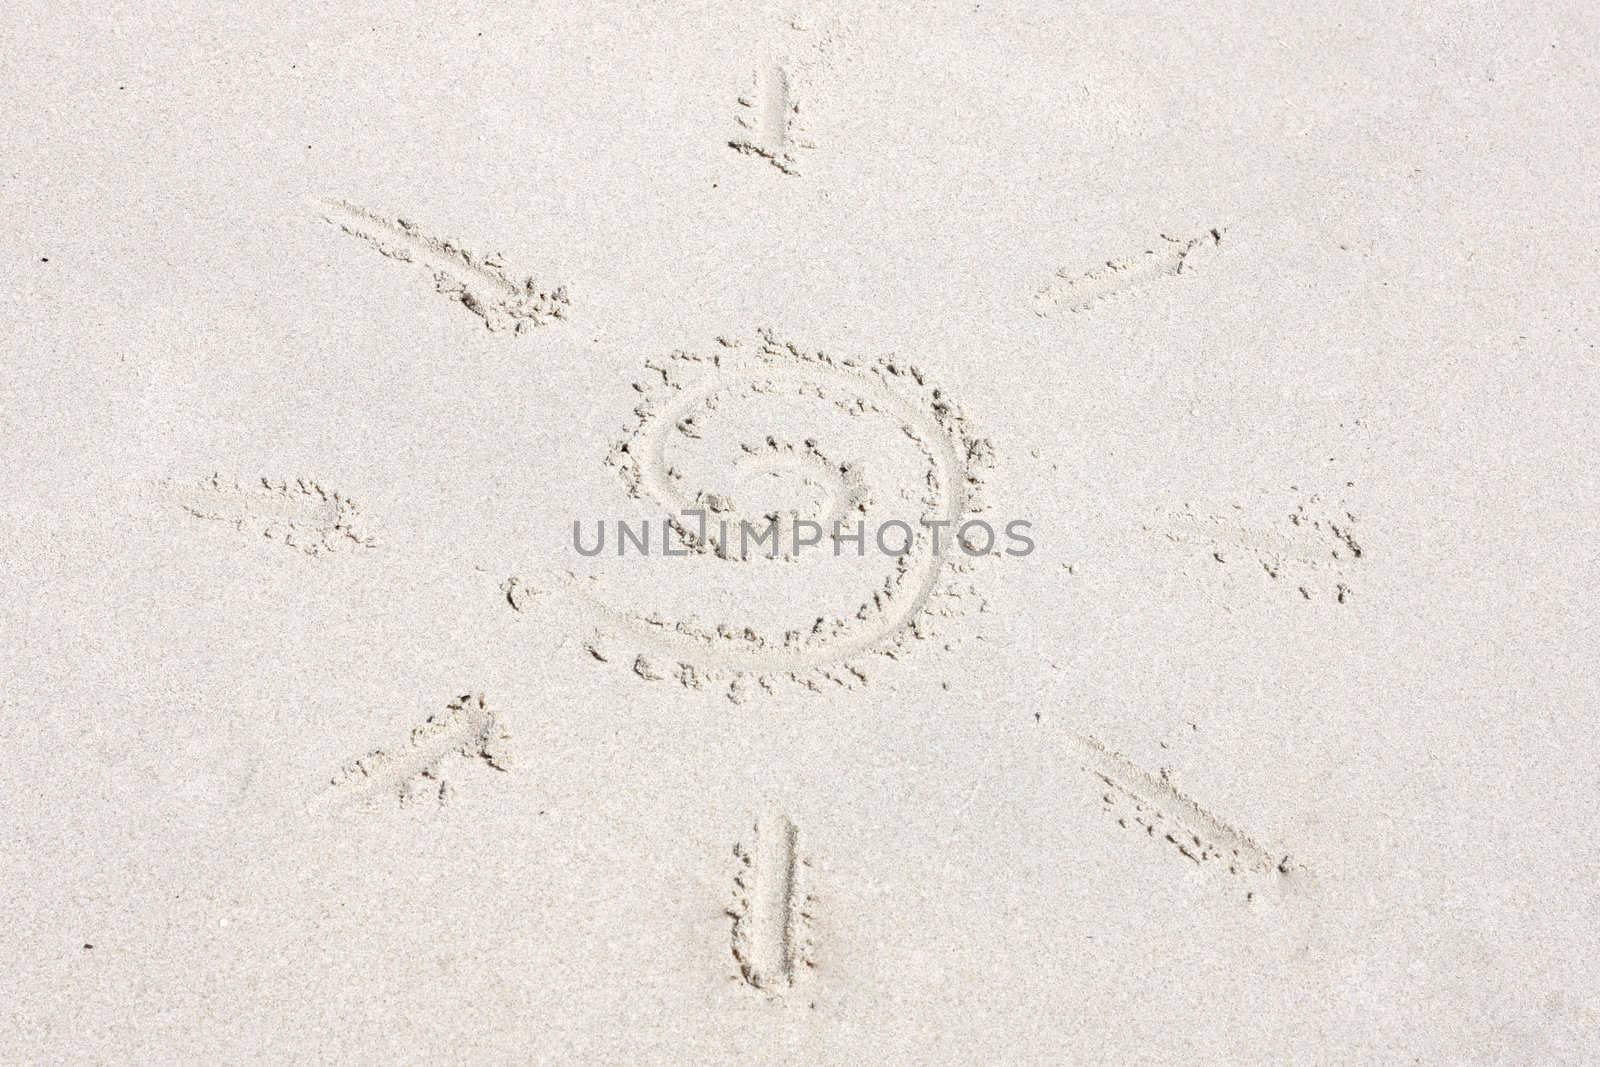 A sun symbol in the sand